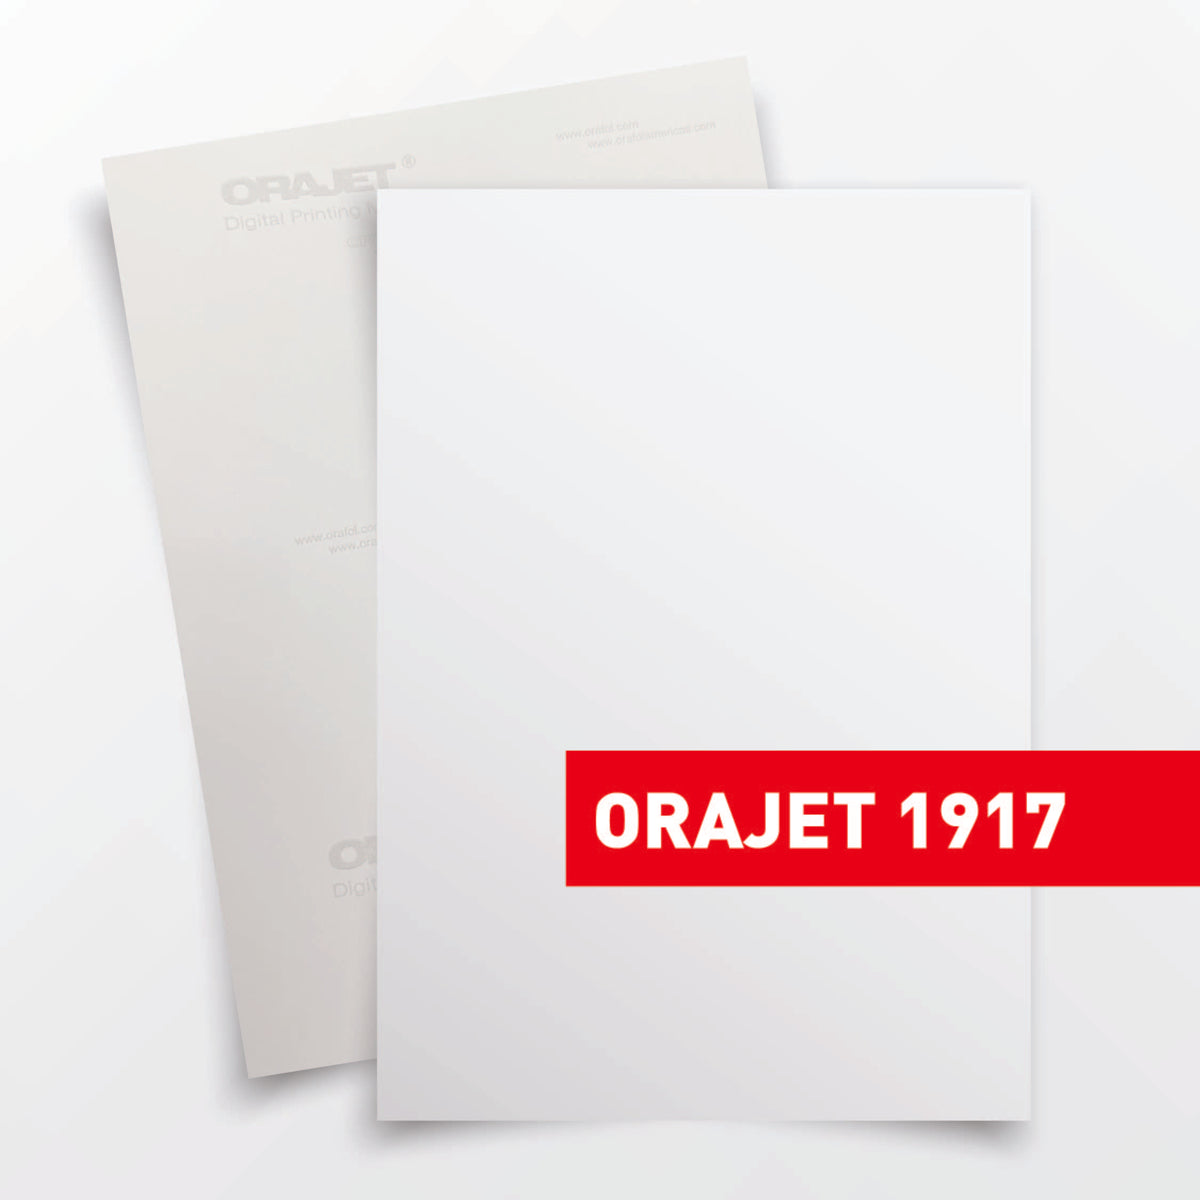 Oracal Inkjet Printable Permanent Adhesive Vinyl – 1917